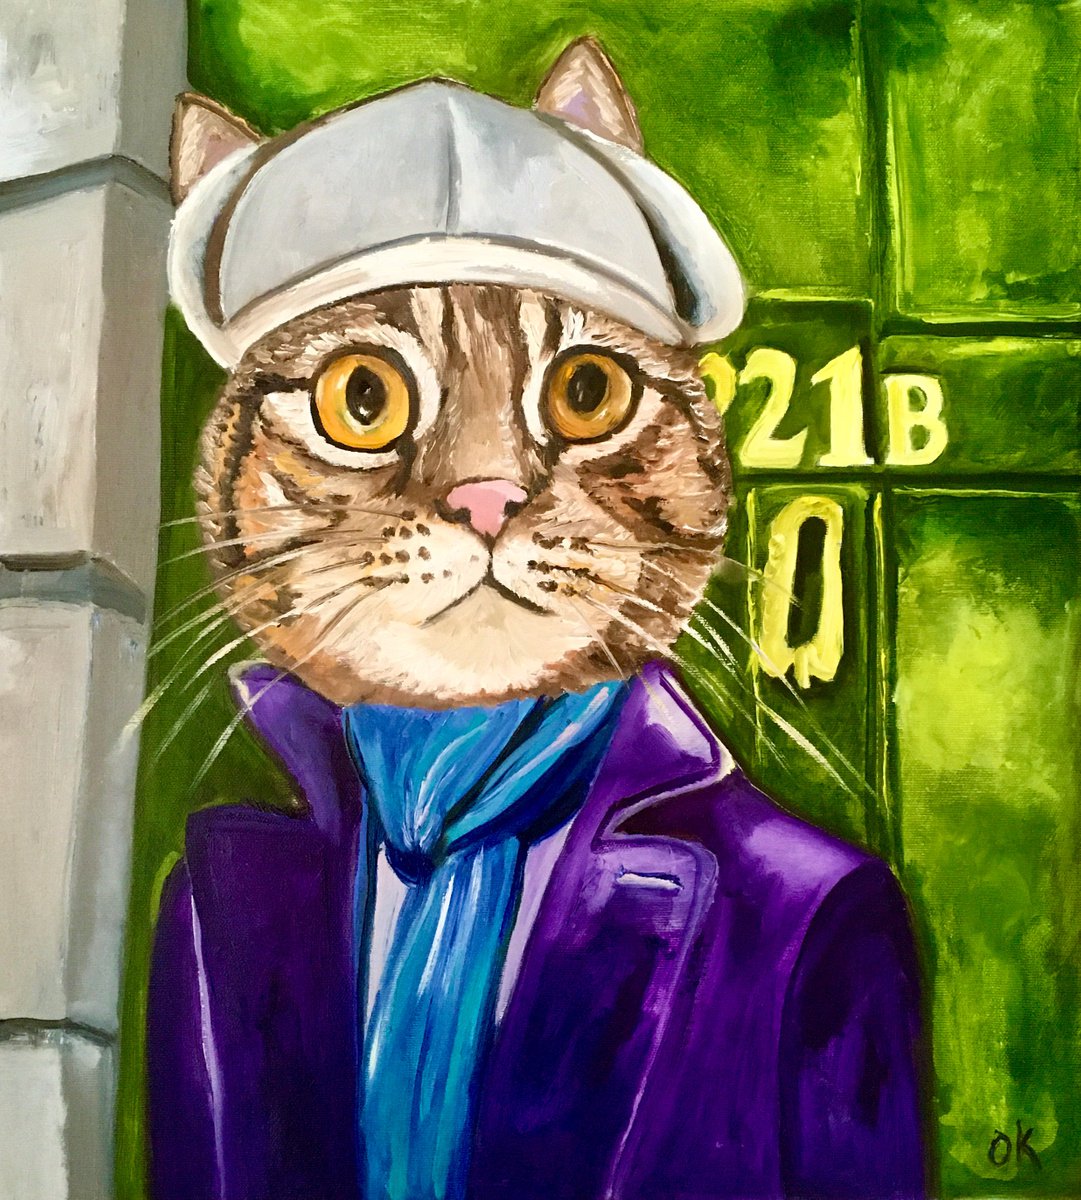 Troy The Cat- Sherlock Holmes Baker Street 221 B oil painting for cat lovers. by Olga Koval